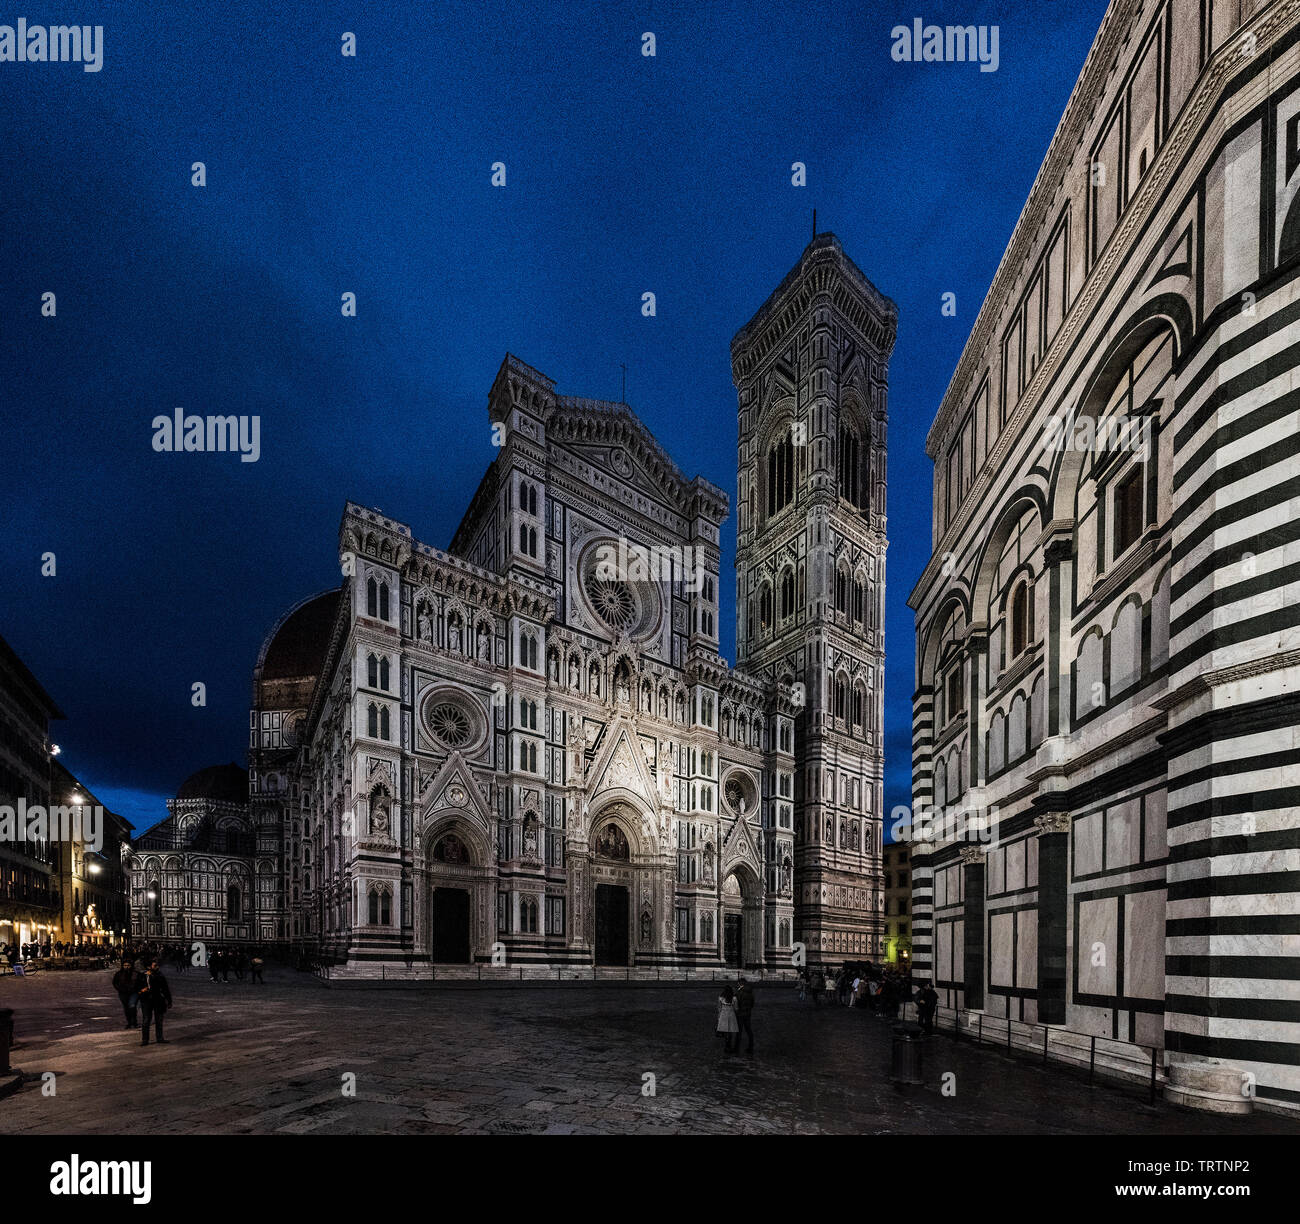 Duomo di Firenze Catedral de noche con el Baptisterio de San Juan en vista, Florencia, Italia, Europa, delante de un fondo blanco Foto de stock